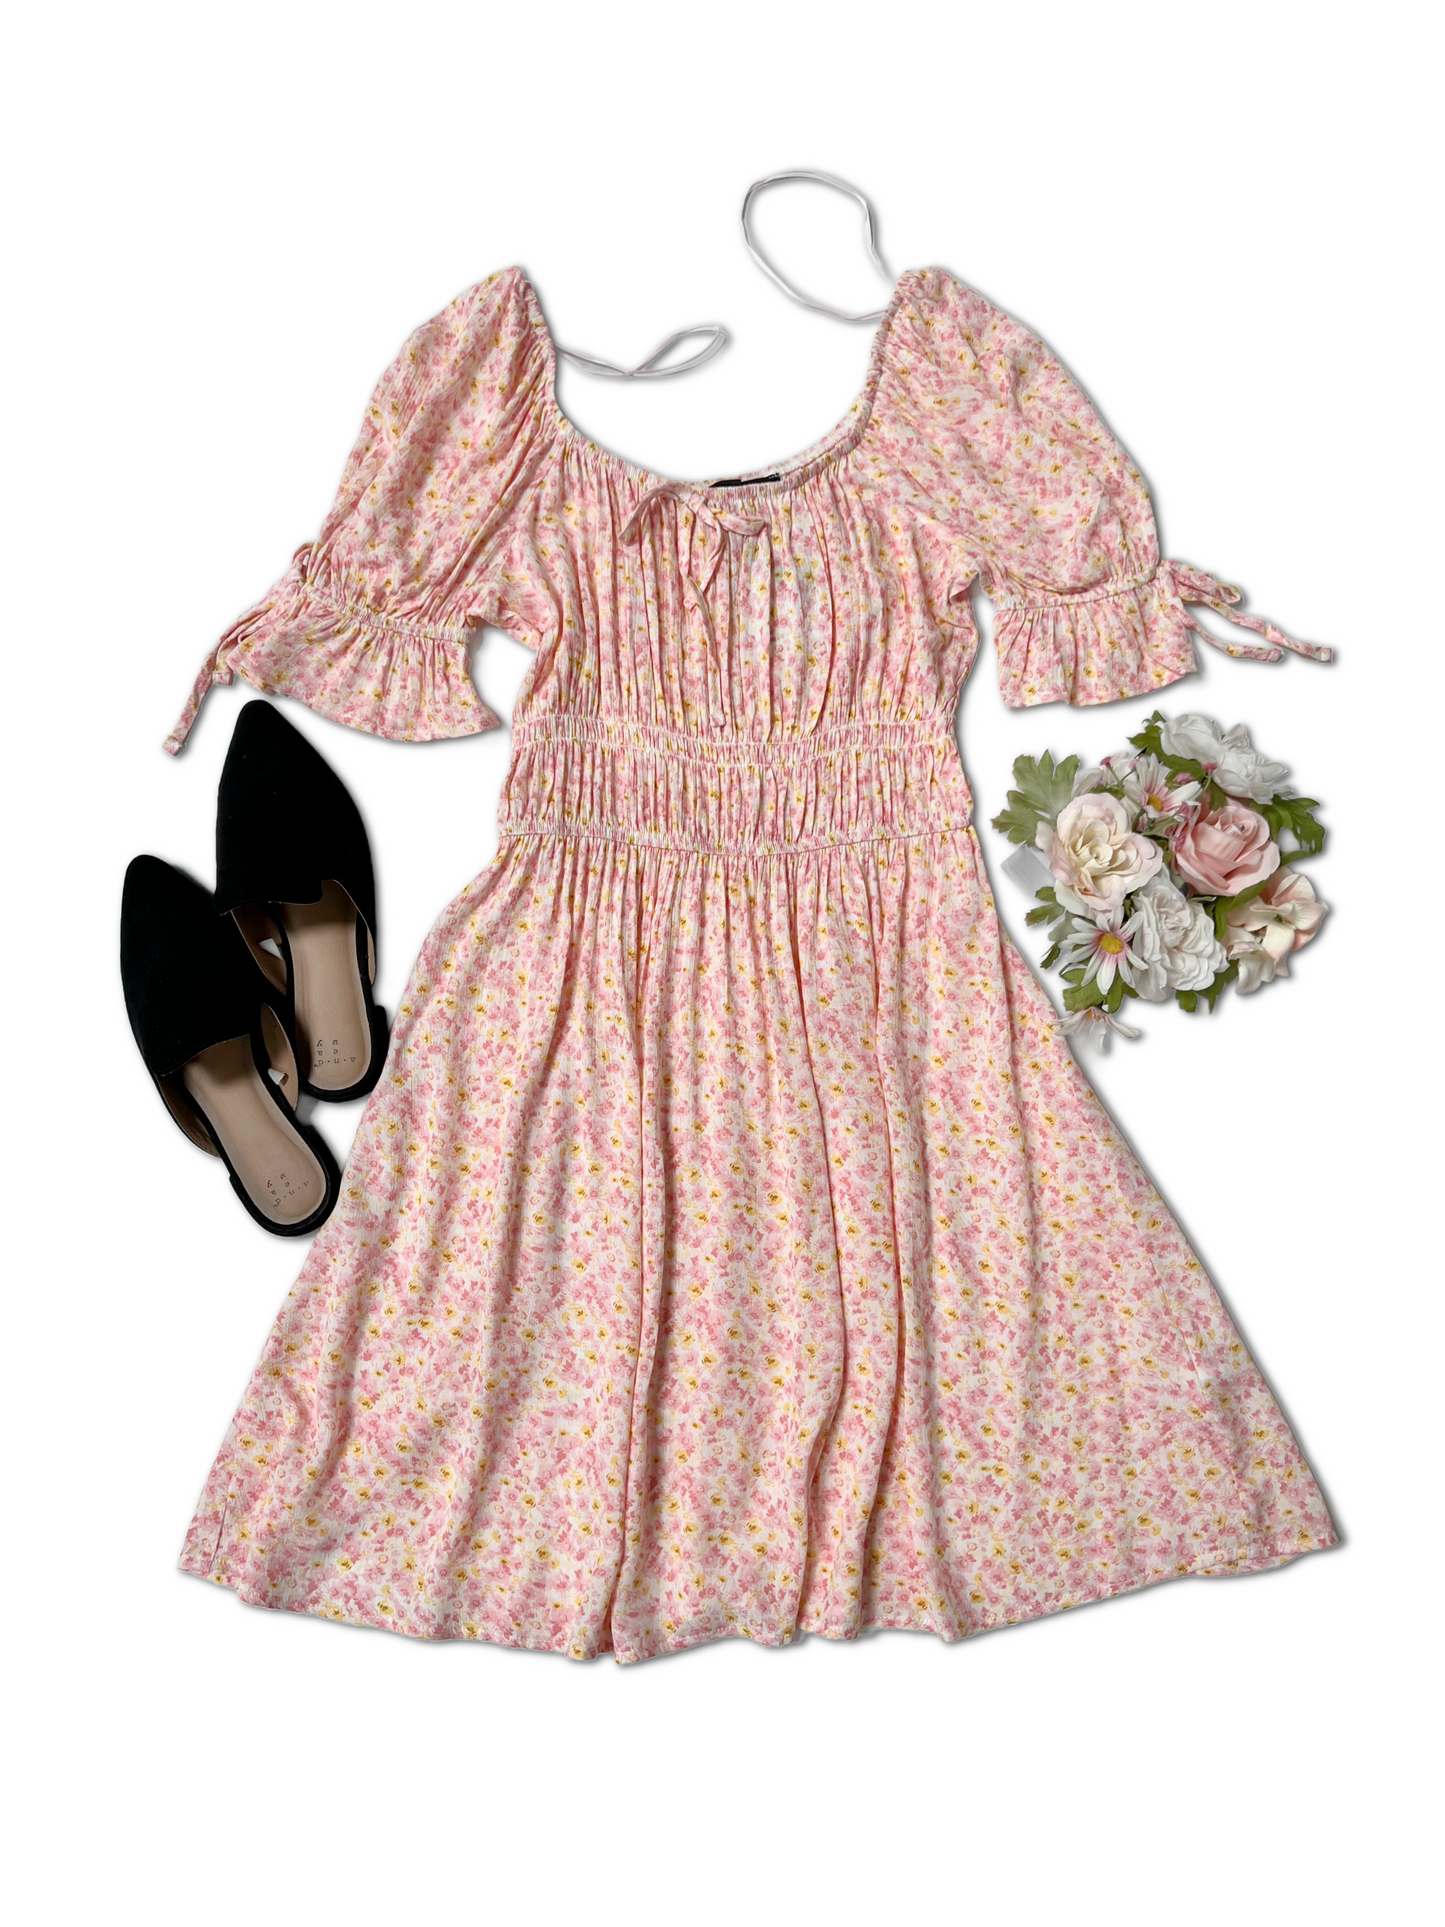 Country Fair - Pink Dress